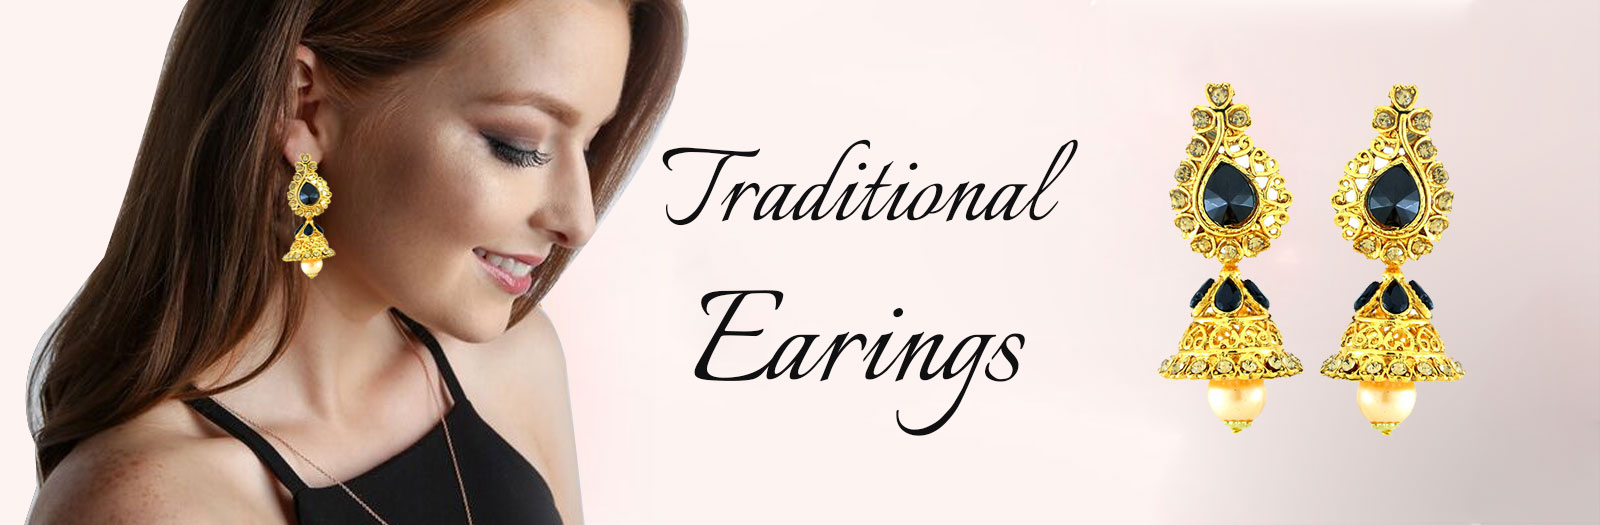 Traditional Earings